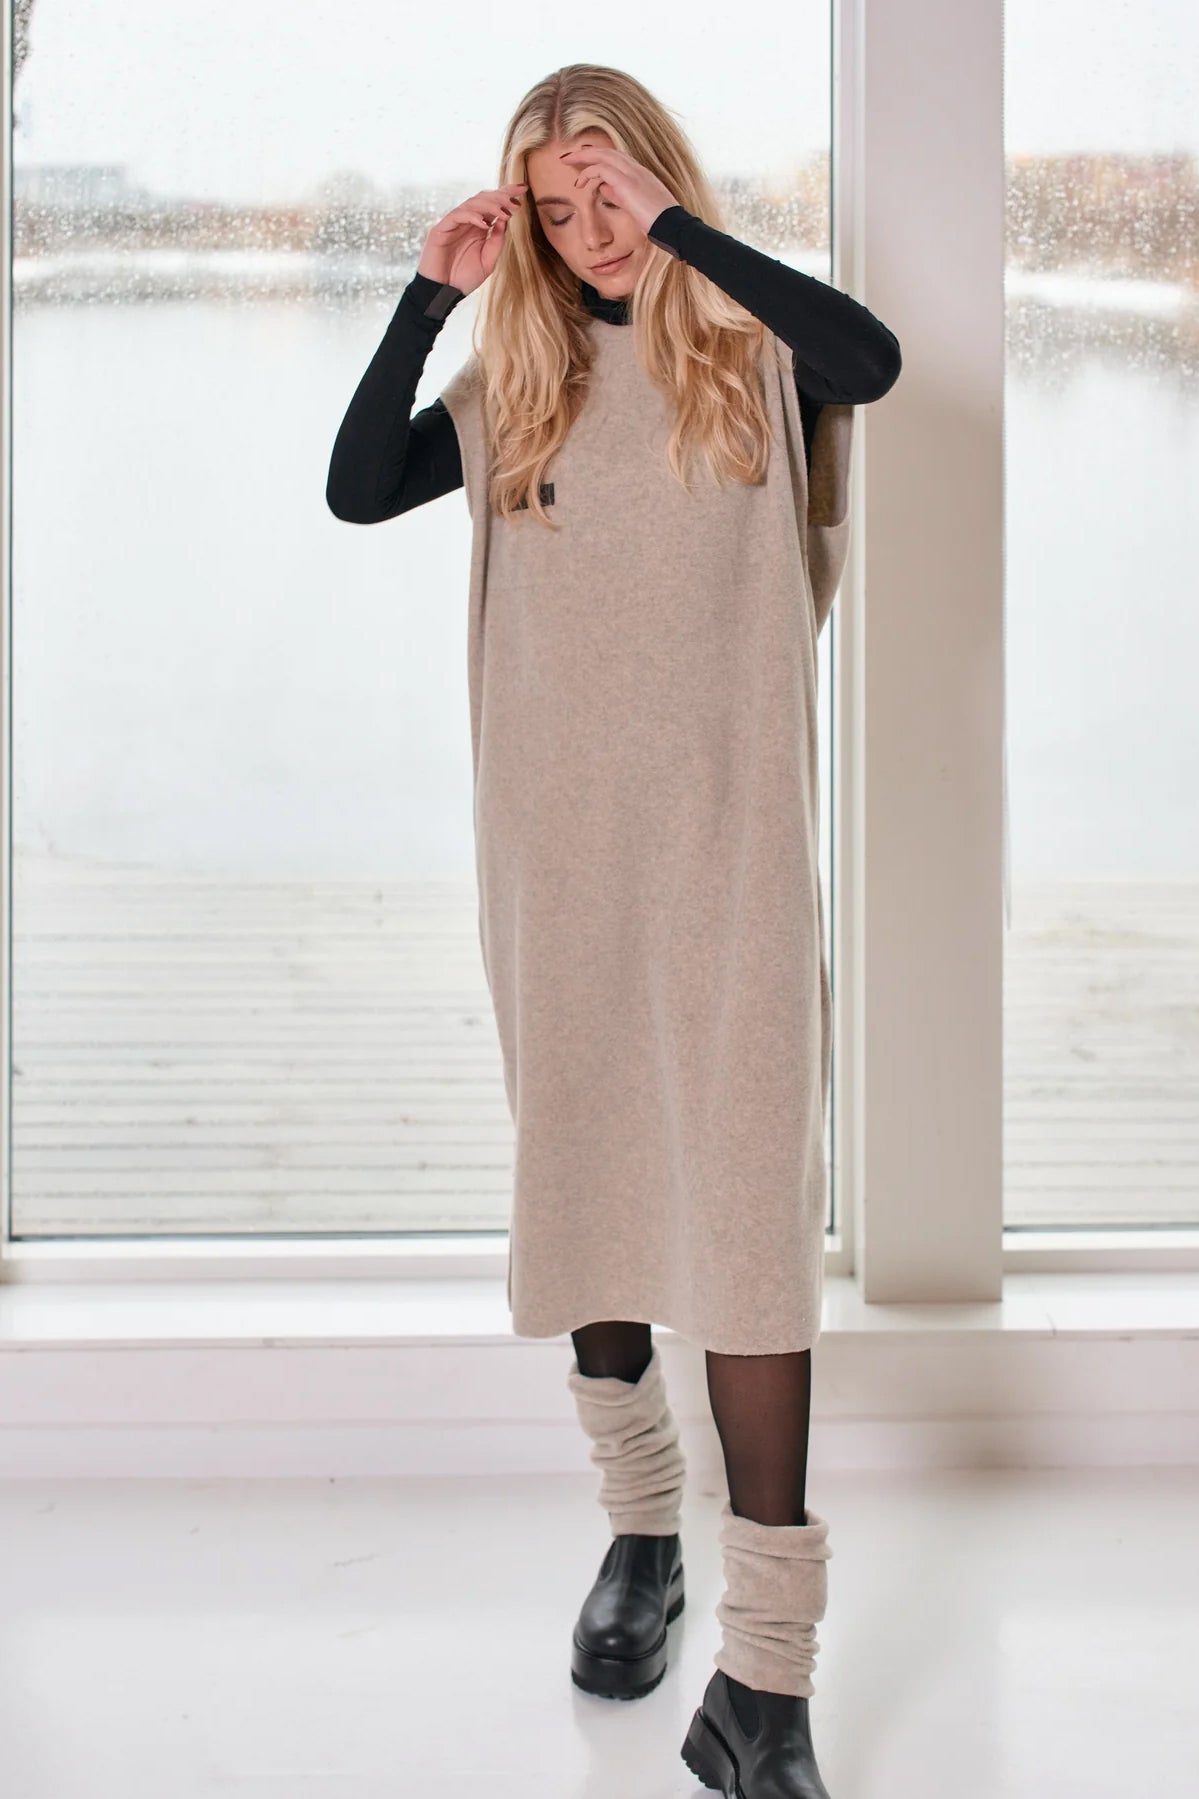 Henriette Steffensen Fleece Tunic Dress Sand 3242 – KIITOSlife